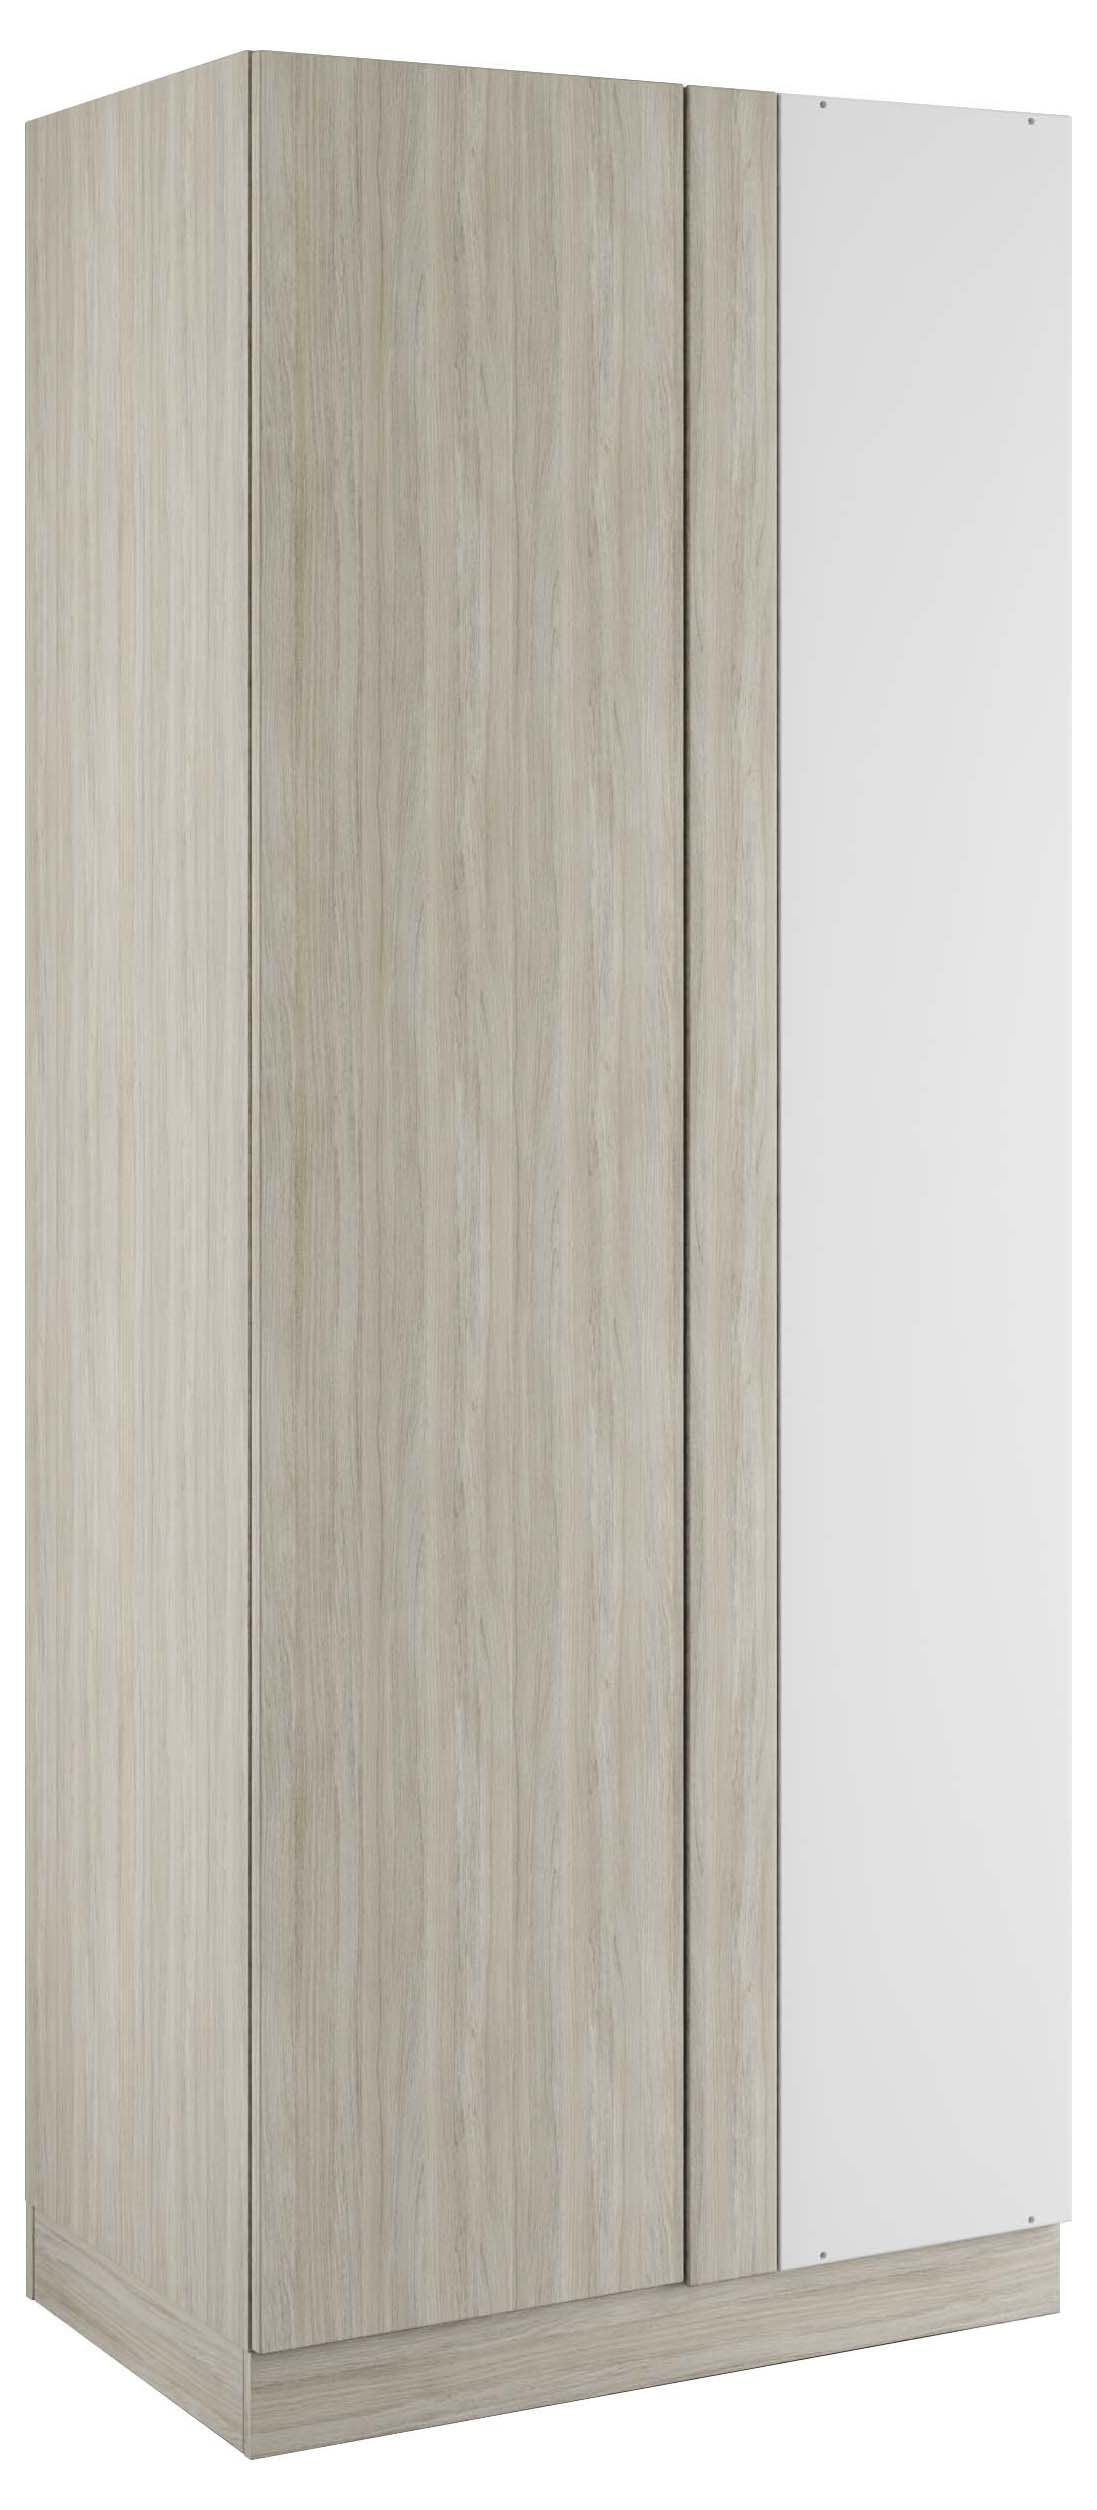 Malton Urban Oak Blind Corner Wardrobe - 900 x 2260 x 608mm